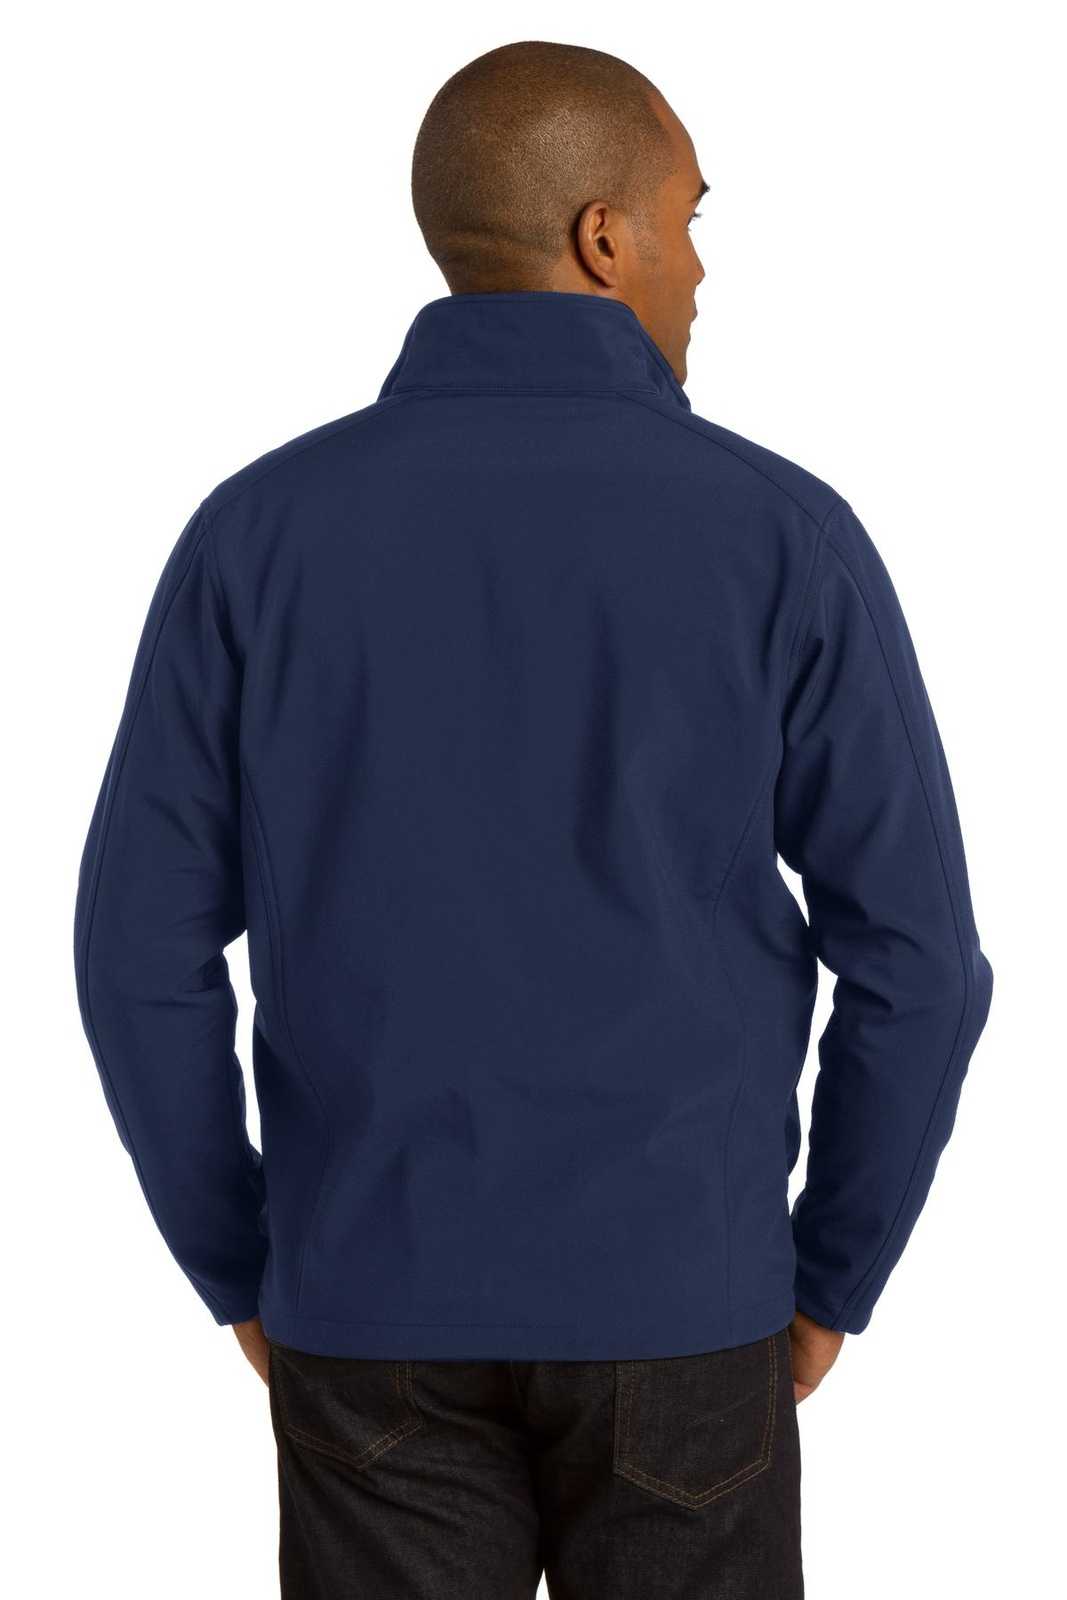 Port Authority J317 Core Soft Shell Jacket - Dress Blue Navy - HIT a Double - 2